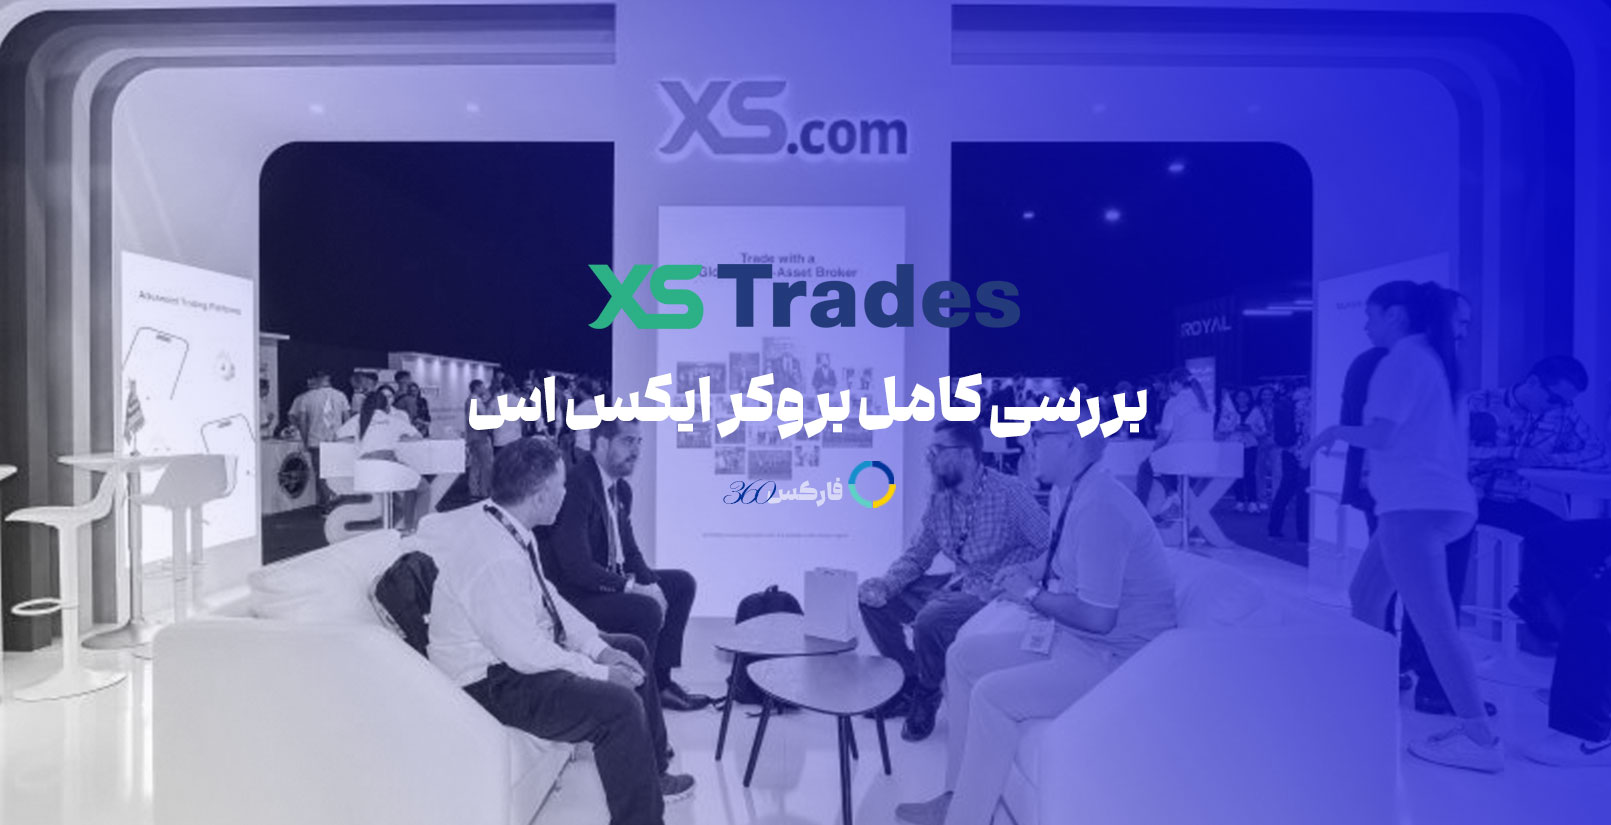 xs - معرفی کامل و ارزیابی بروکر ایکس اس تریدز برای ایرانیان - فارکس360